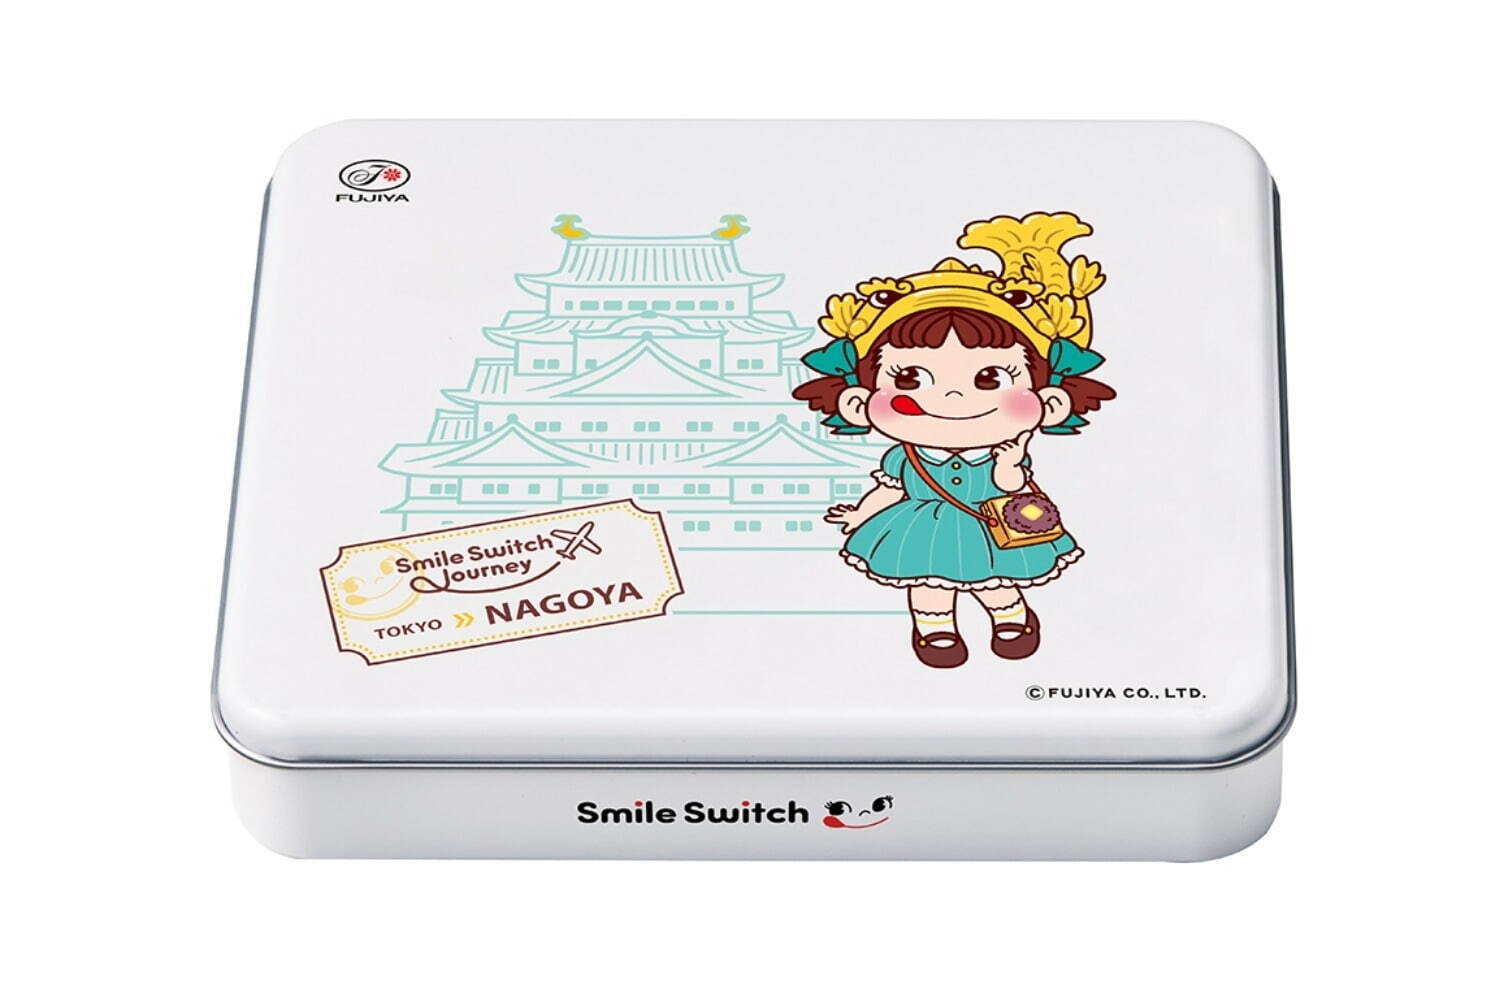 「Smile Switch Journey 名古屋限定缶」880円